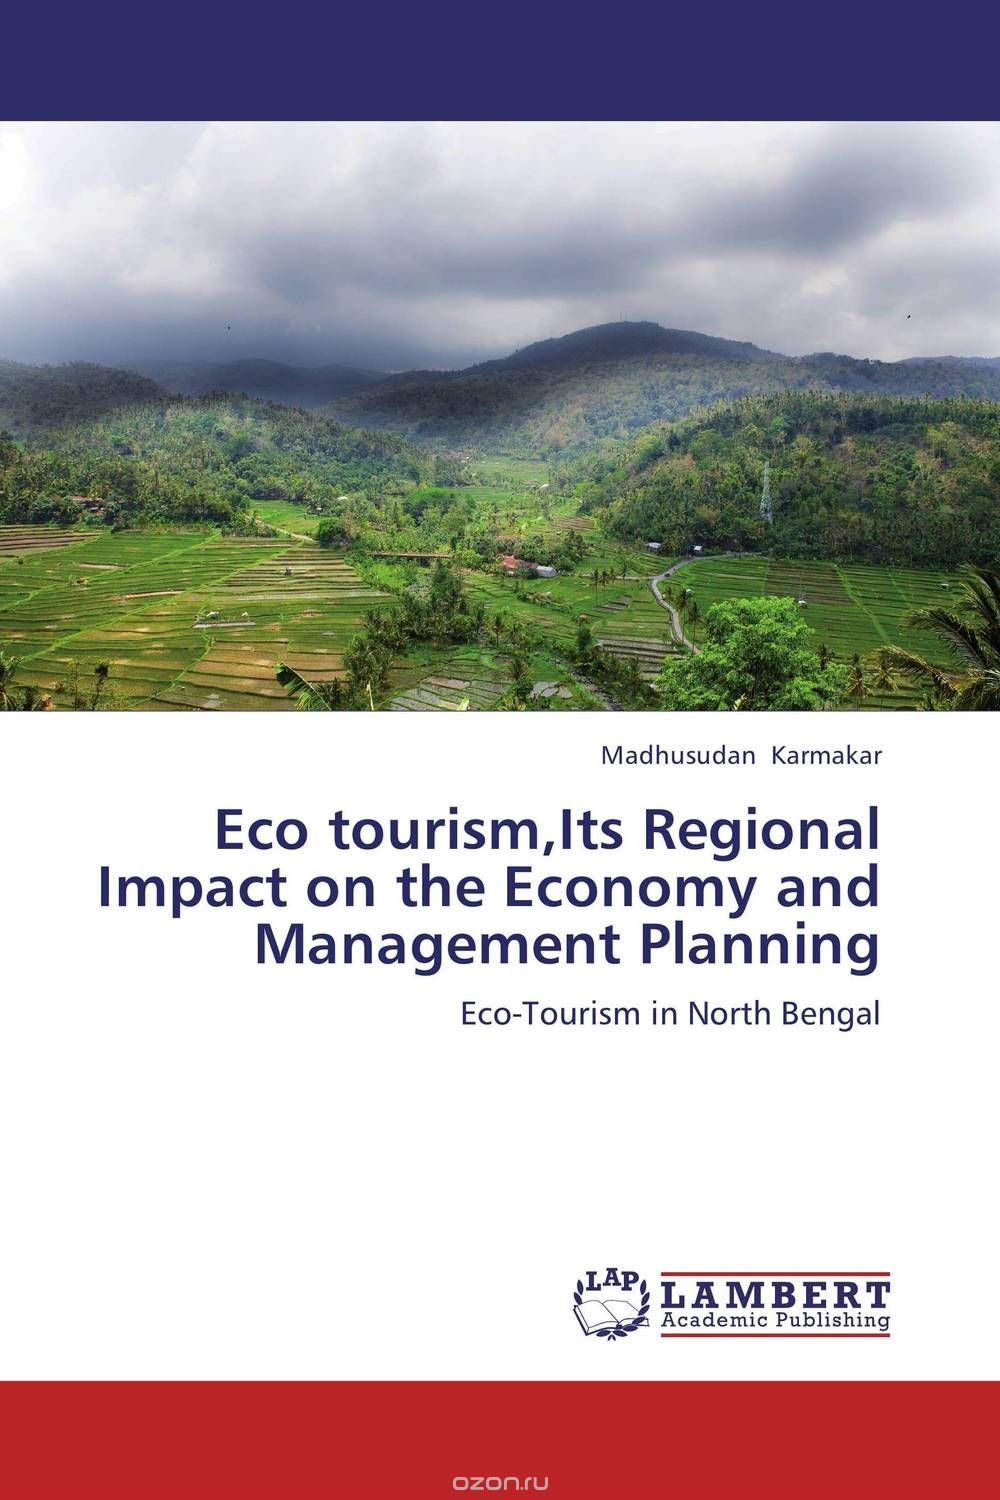 Скачать книгу "Eco tourism,Its Regional Impact on the Economy and Management Planning"